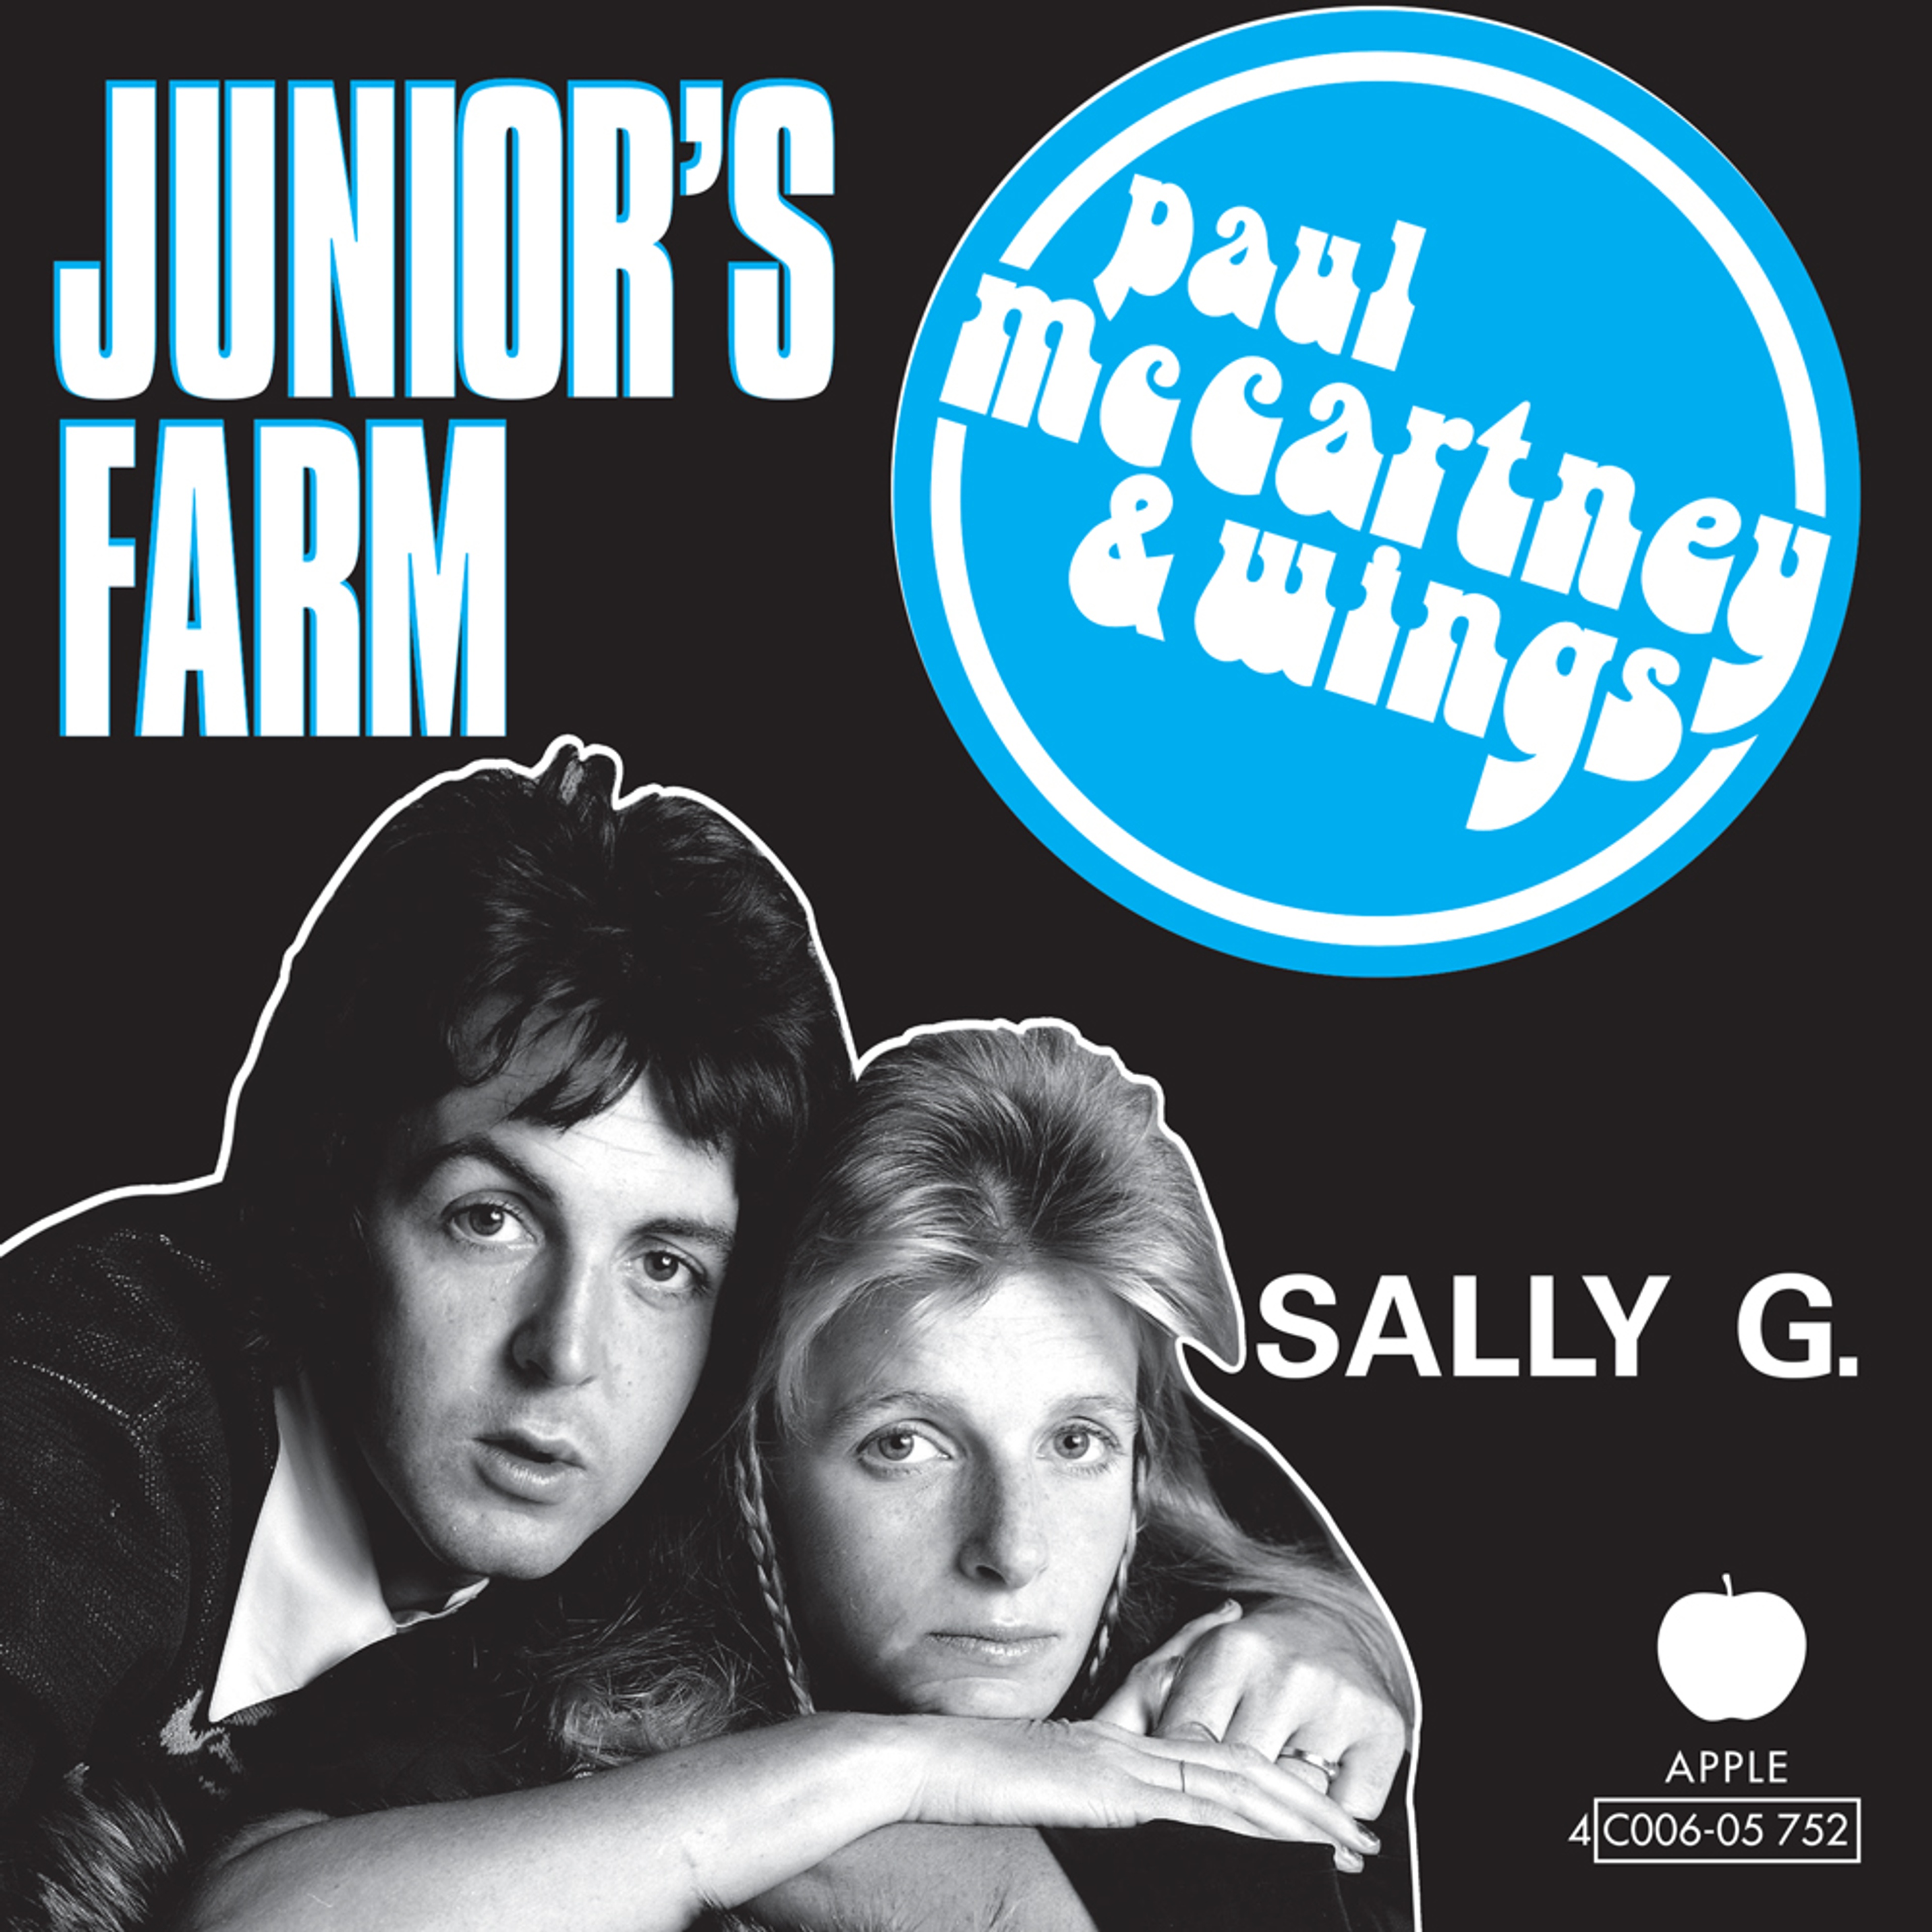 “Junior's Farm” Single artwork as featured in 'The 7" Singles Box'